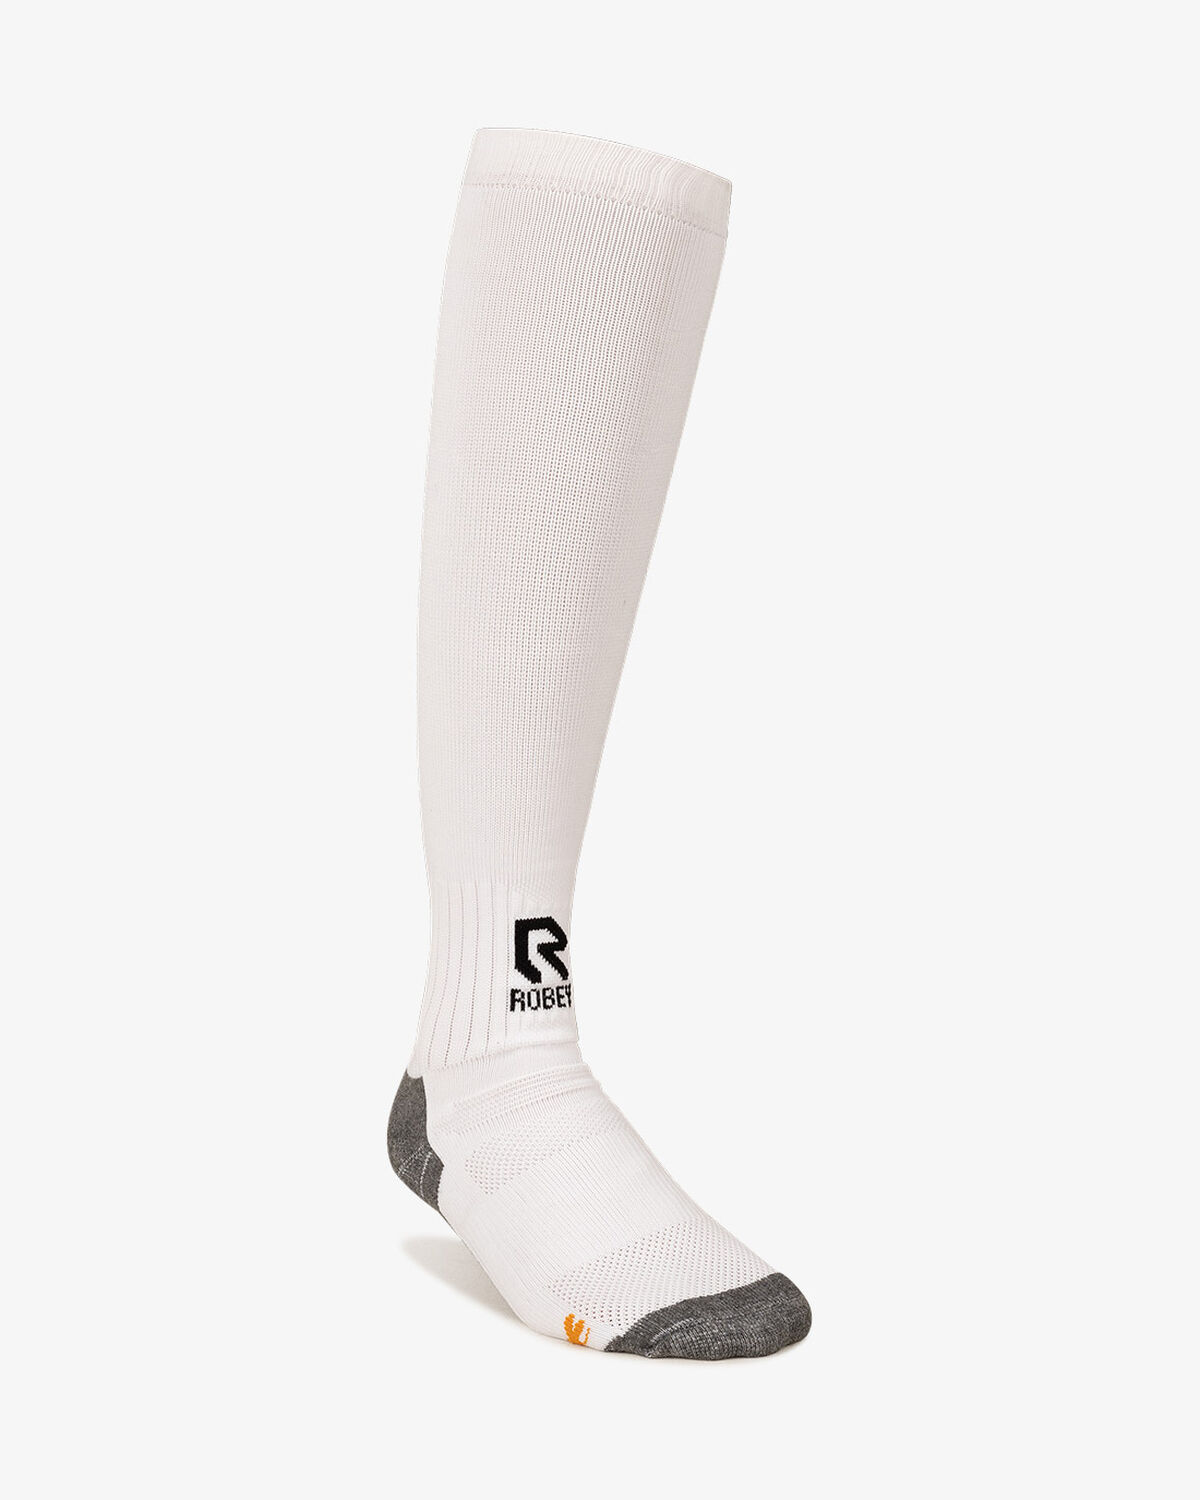 Pro Socks, White, hi-res